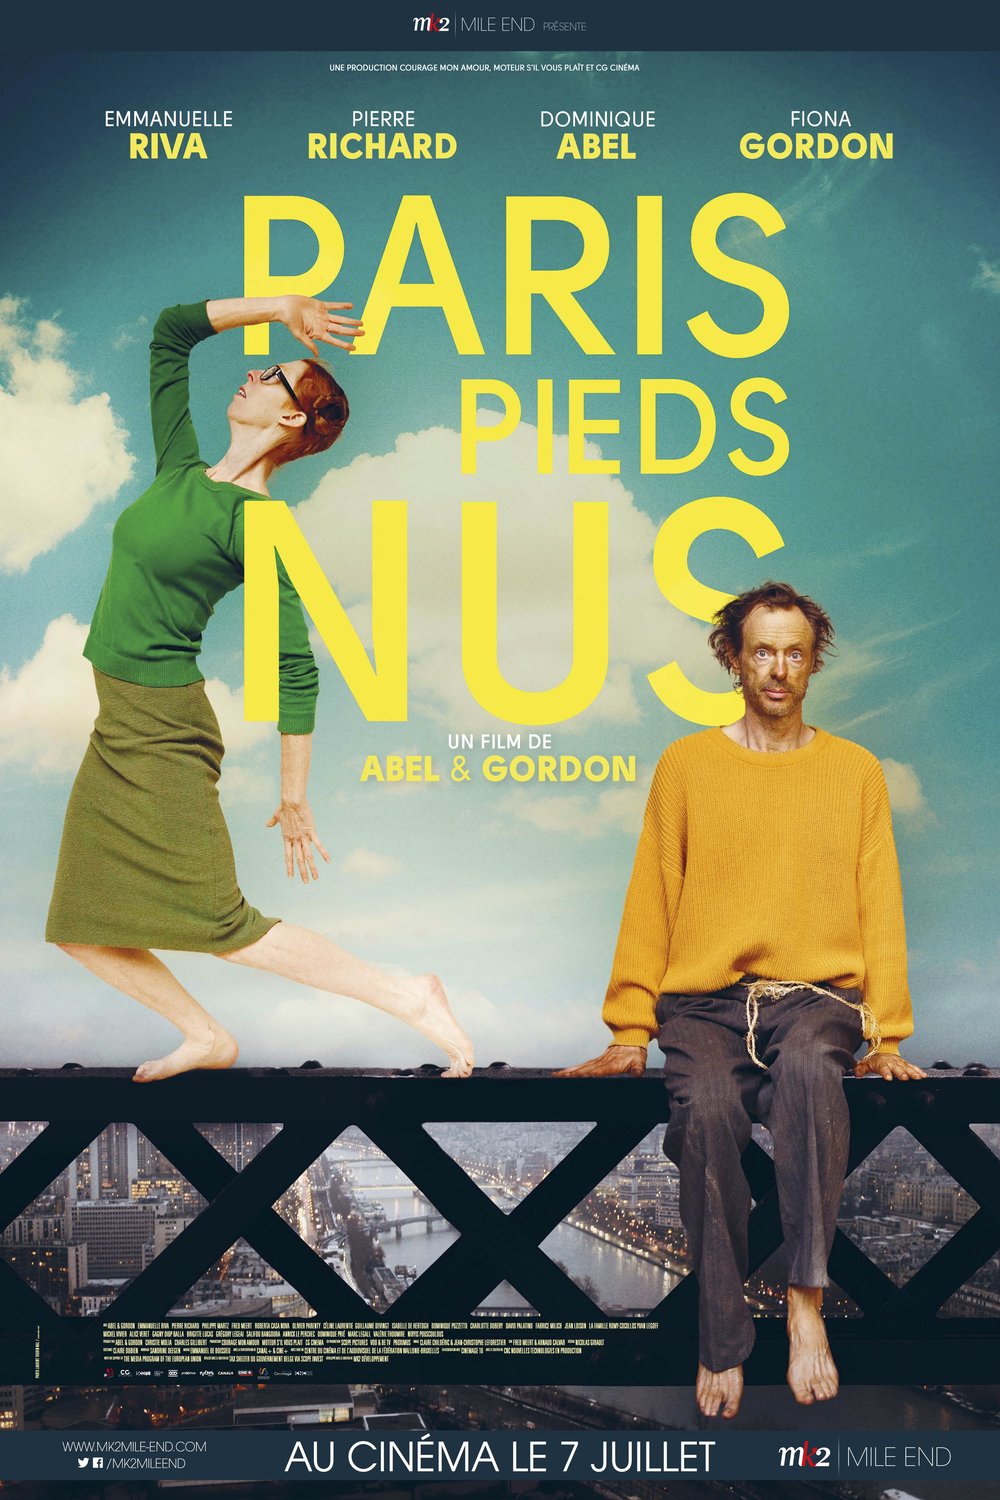 Poster of the movie Paris pieds nus